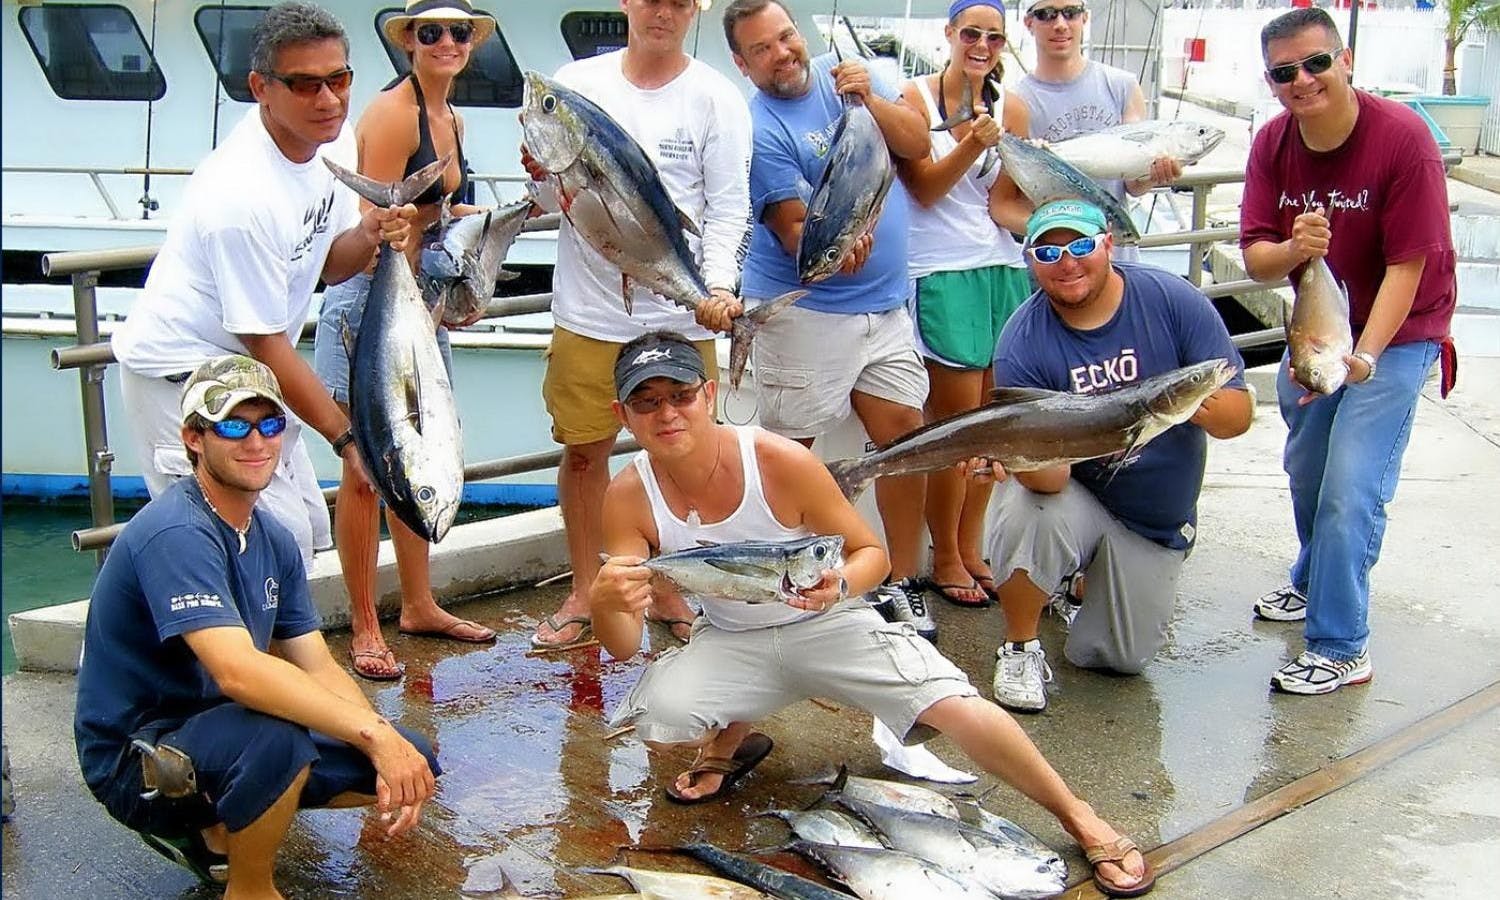 Sport fishing tour in Miami Musement